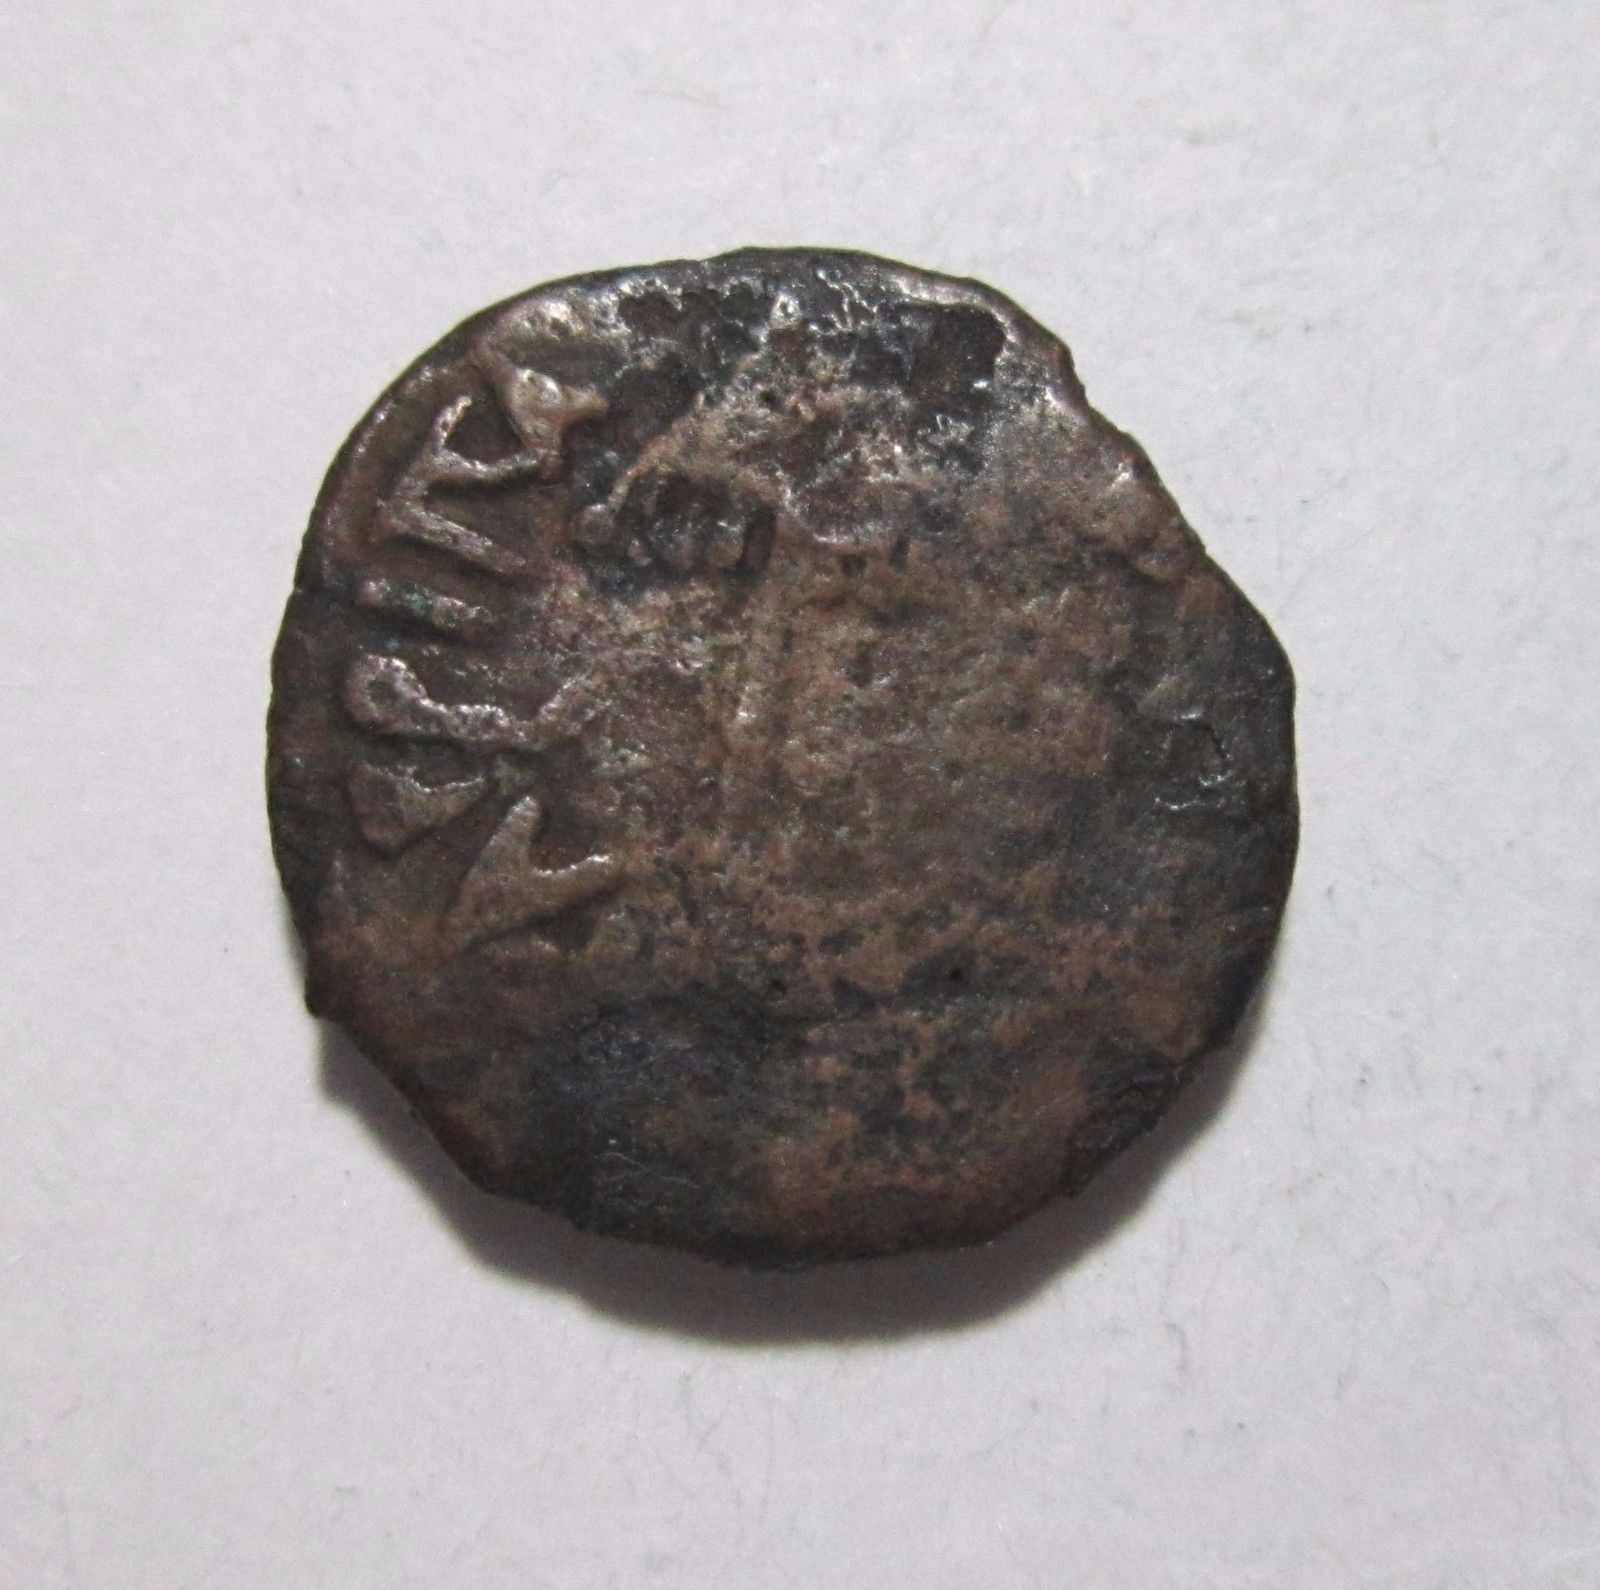 JUDEA, BRONZE 1 PRUTAH, HEROD AGRIPPA I, 37-44 AD. UNDER CALIGULA AND CLAUDIUS